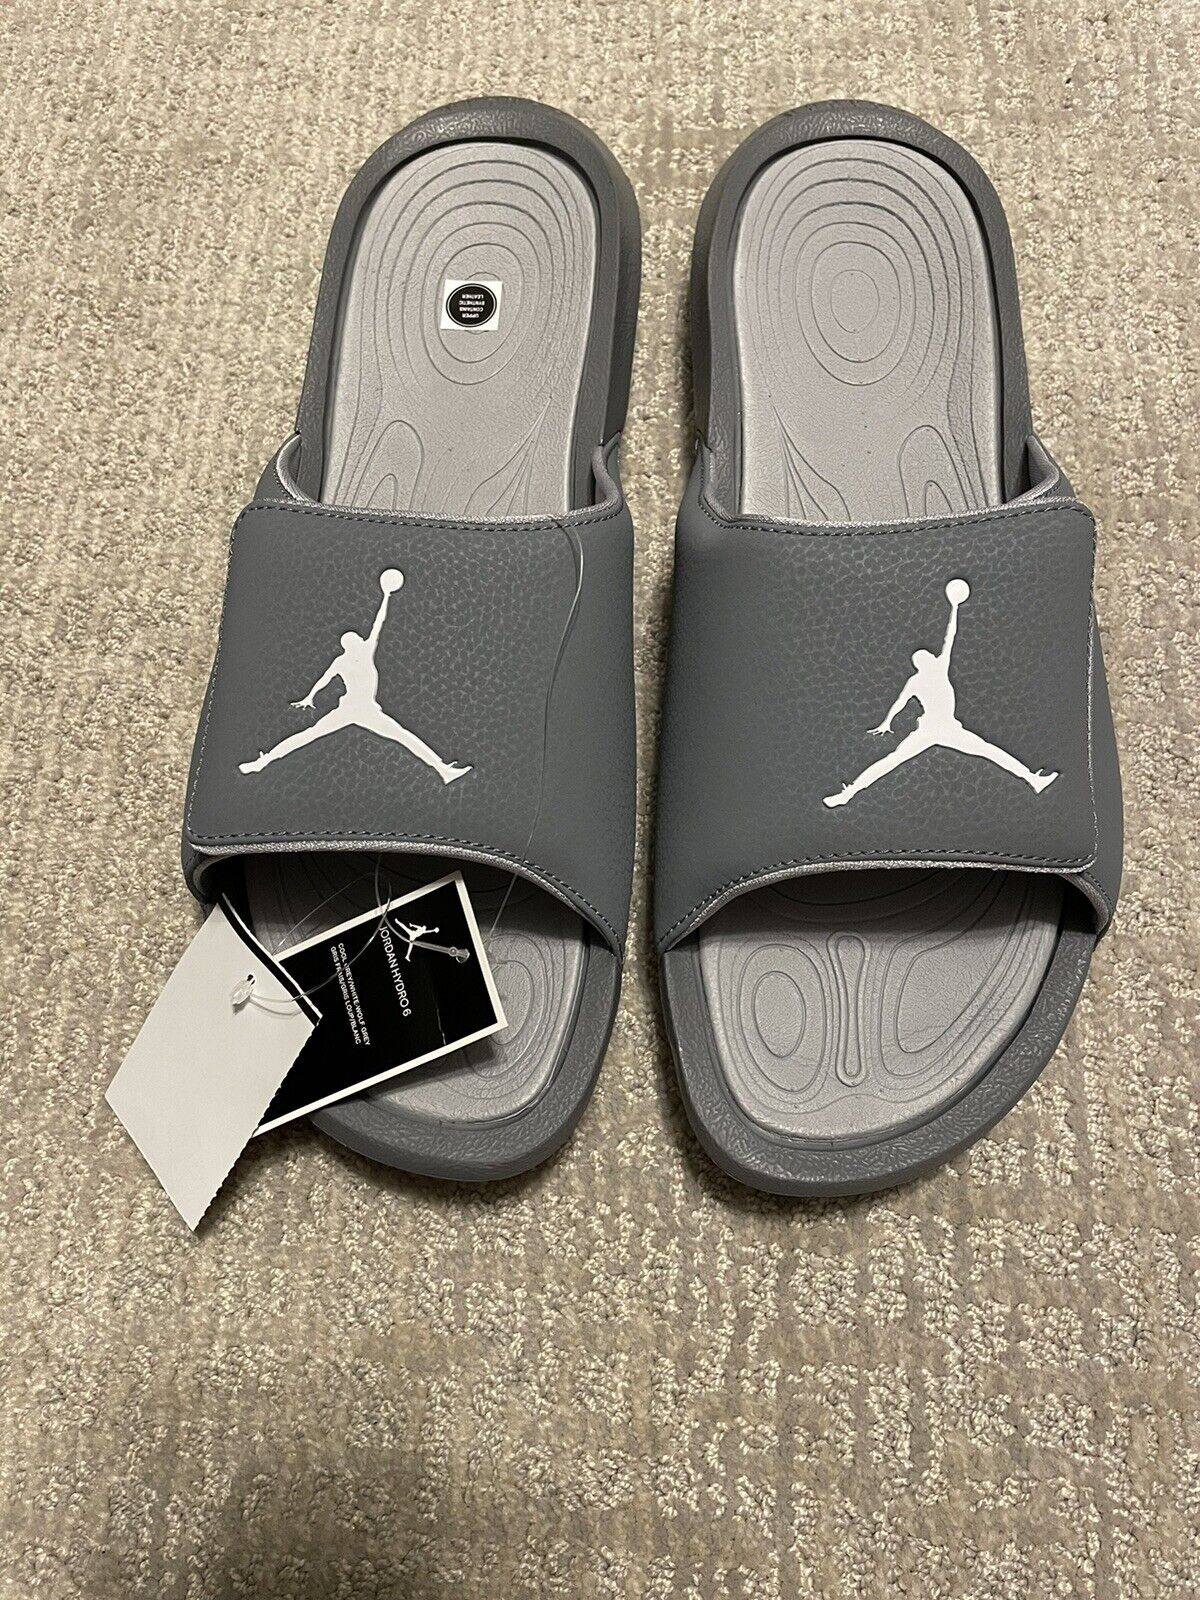 Nike Air Jordan Hydro 6 Cool Grey Slides Sandals Men's Size 10 ASA College: Florida